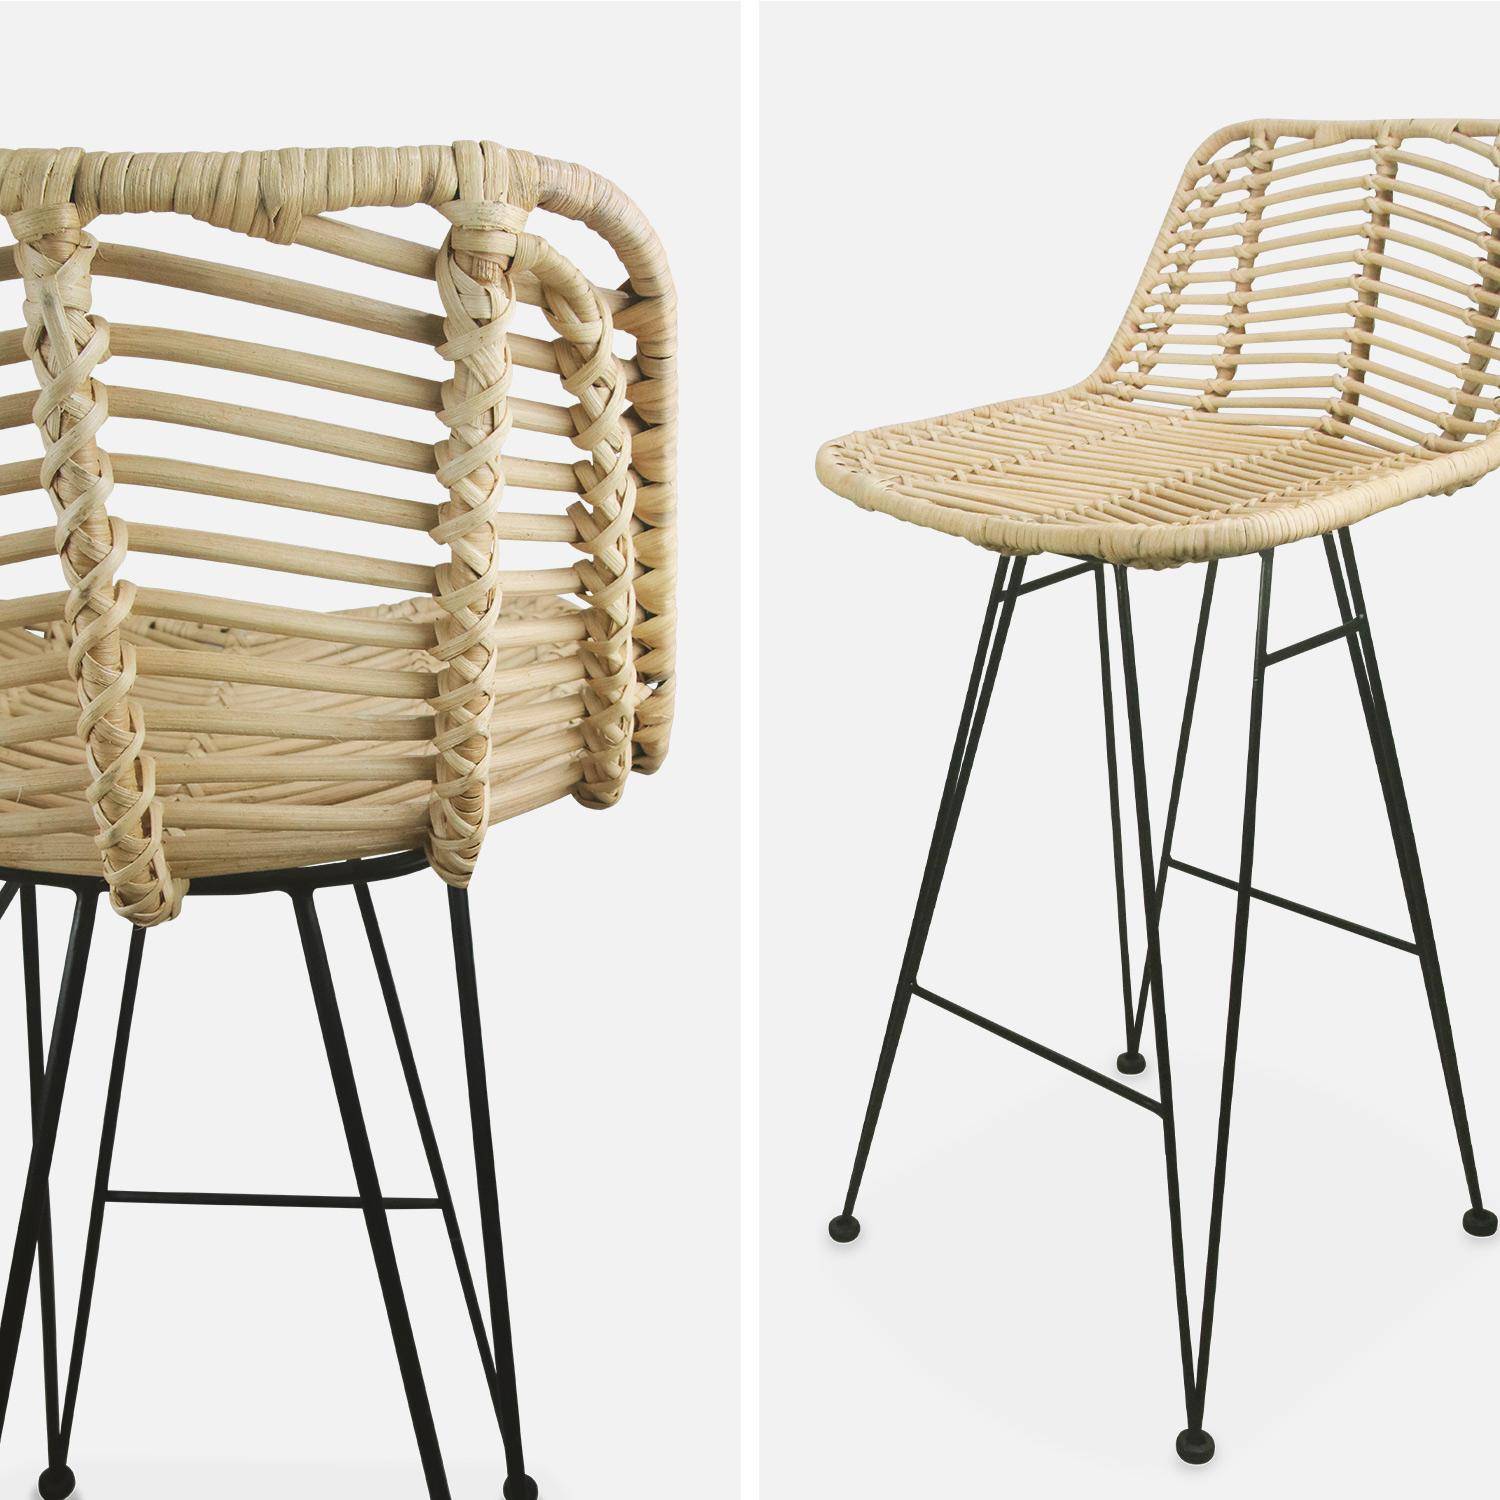 Pair of rattan bar stools with cushions, seat height 67cm - Cahya - Natural rattan, Beige cushions,sweeek,Photo7